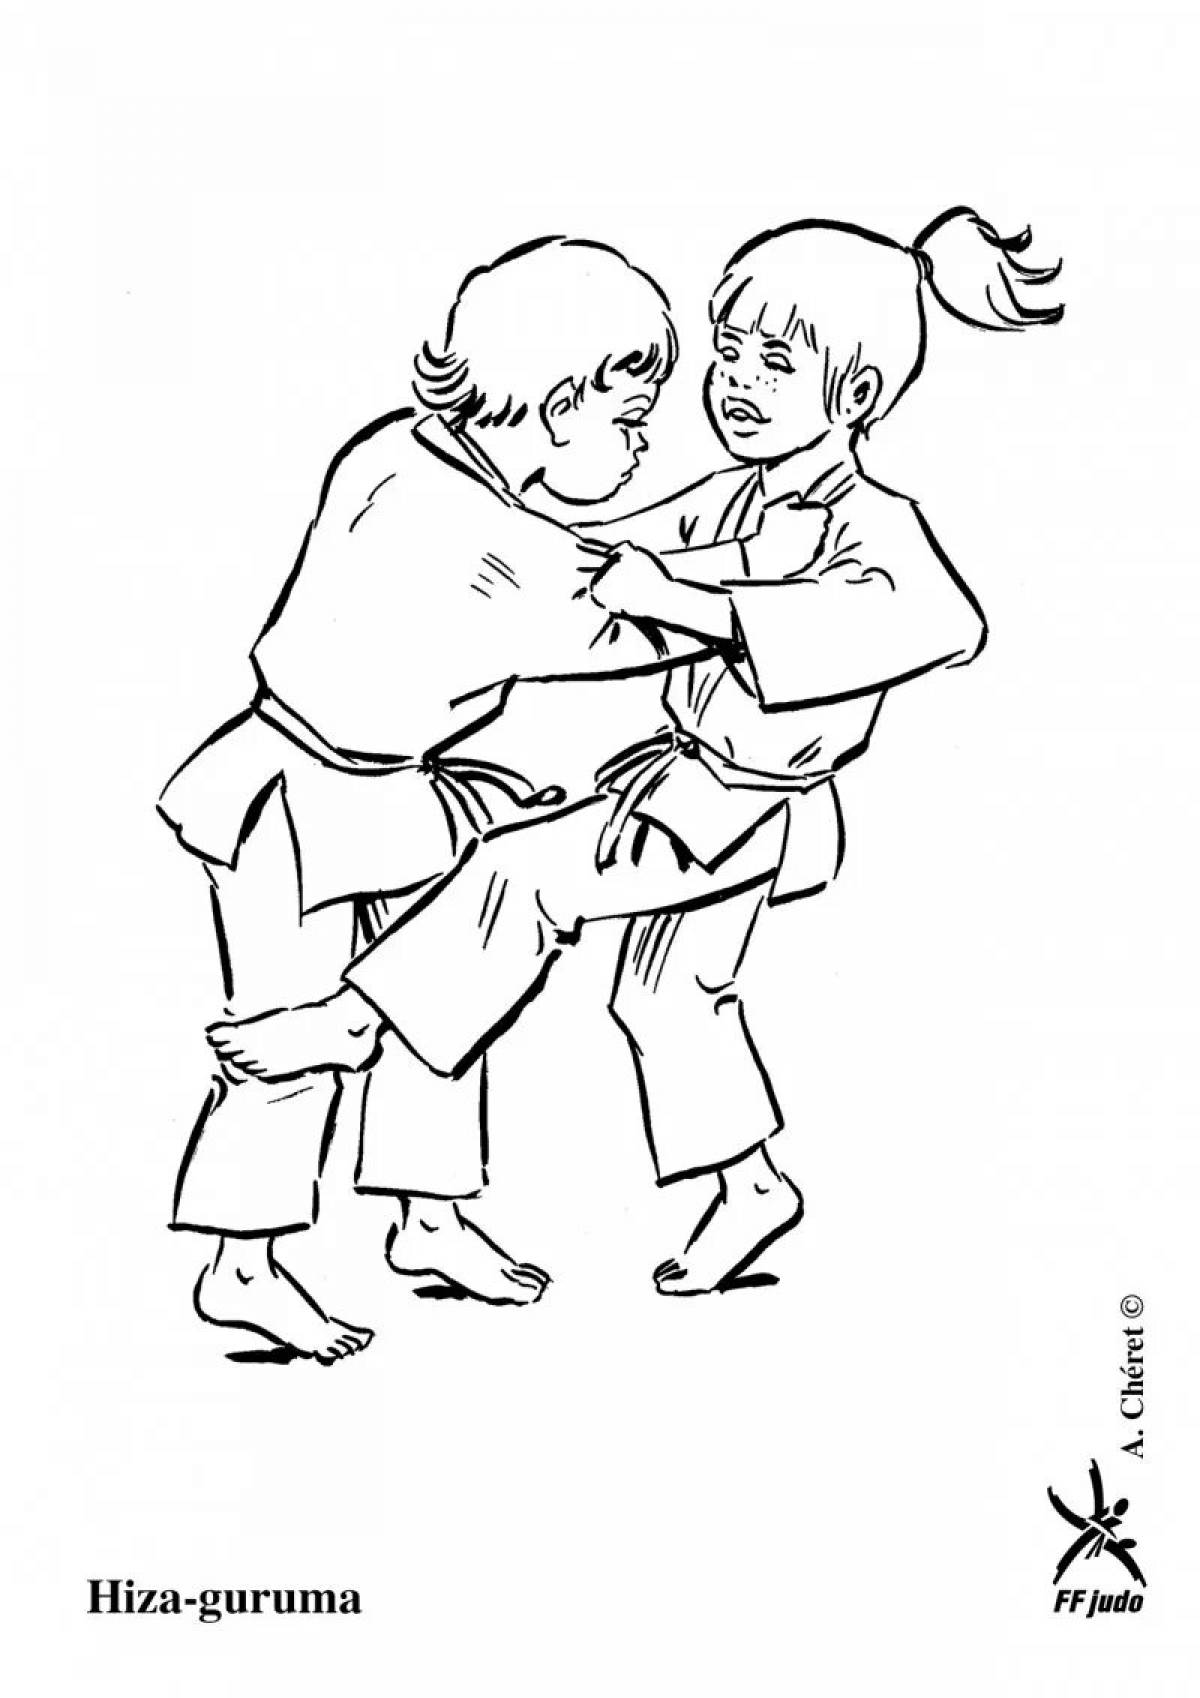 Judo for kids #3